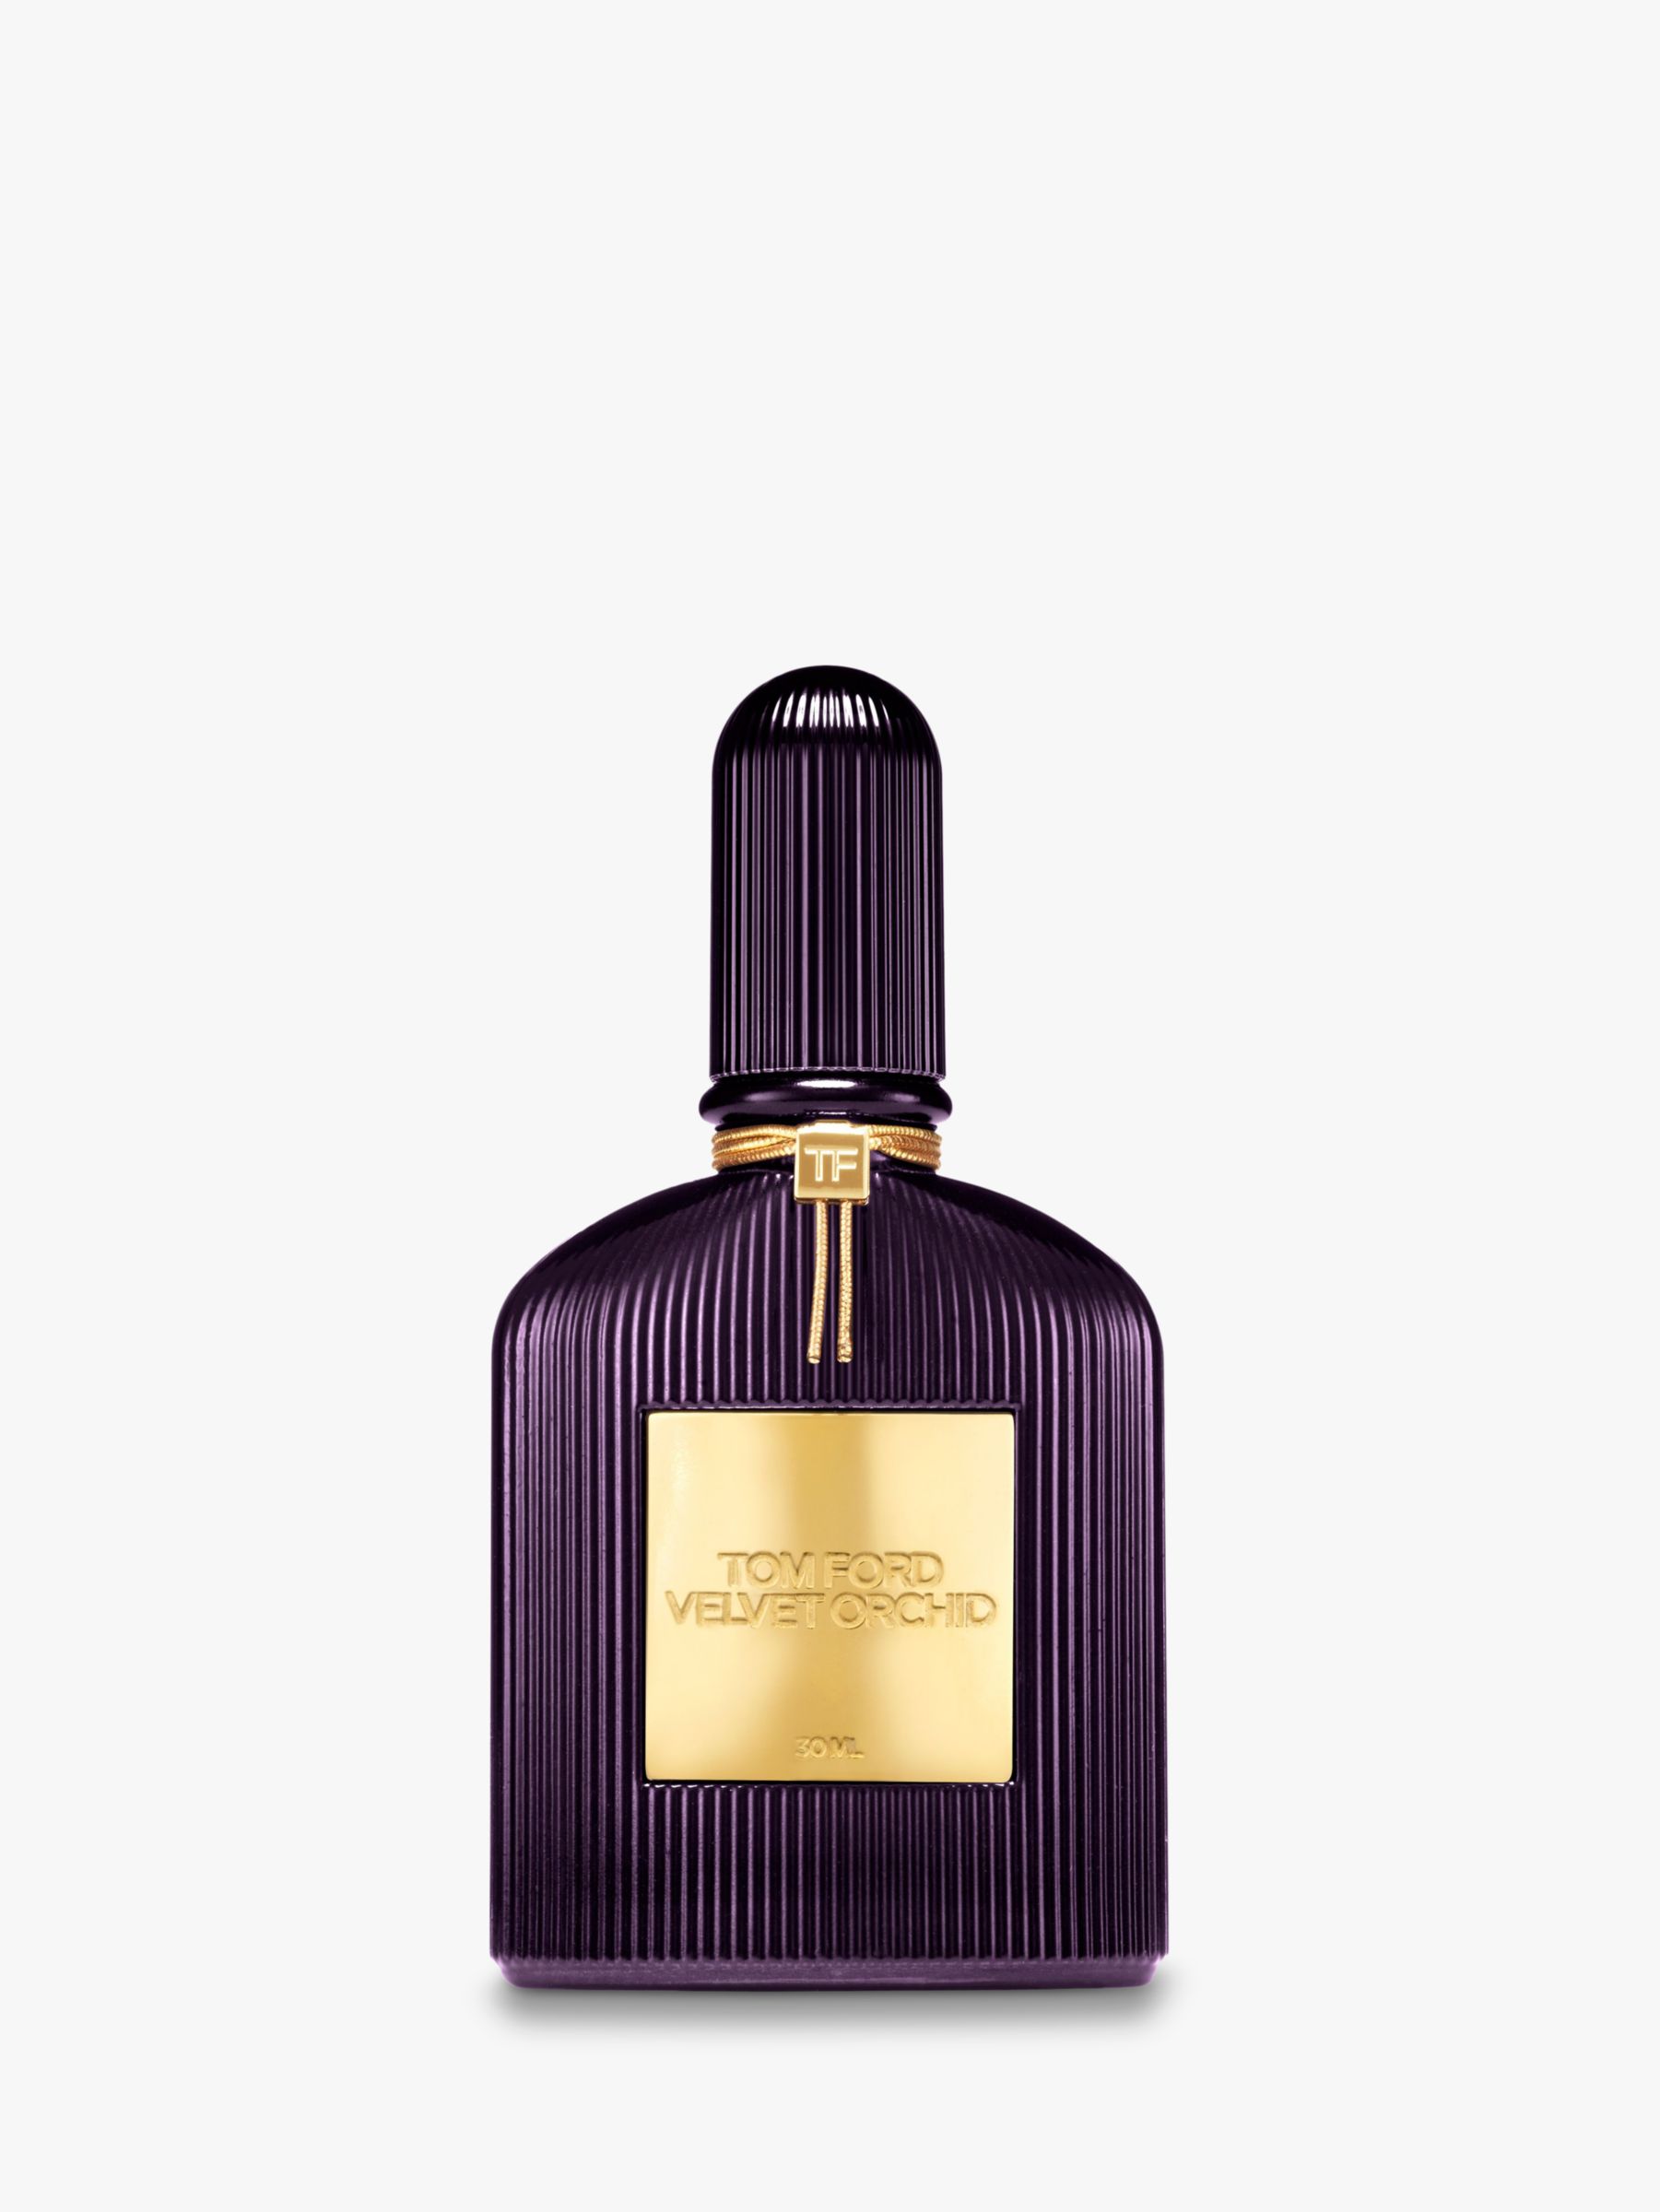 tom ford perfume purple bottle